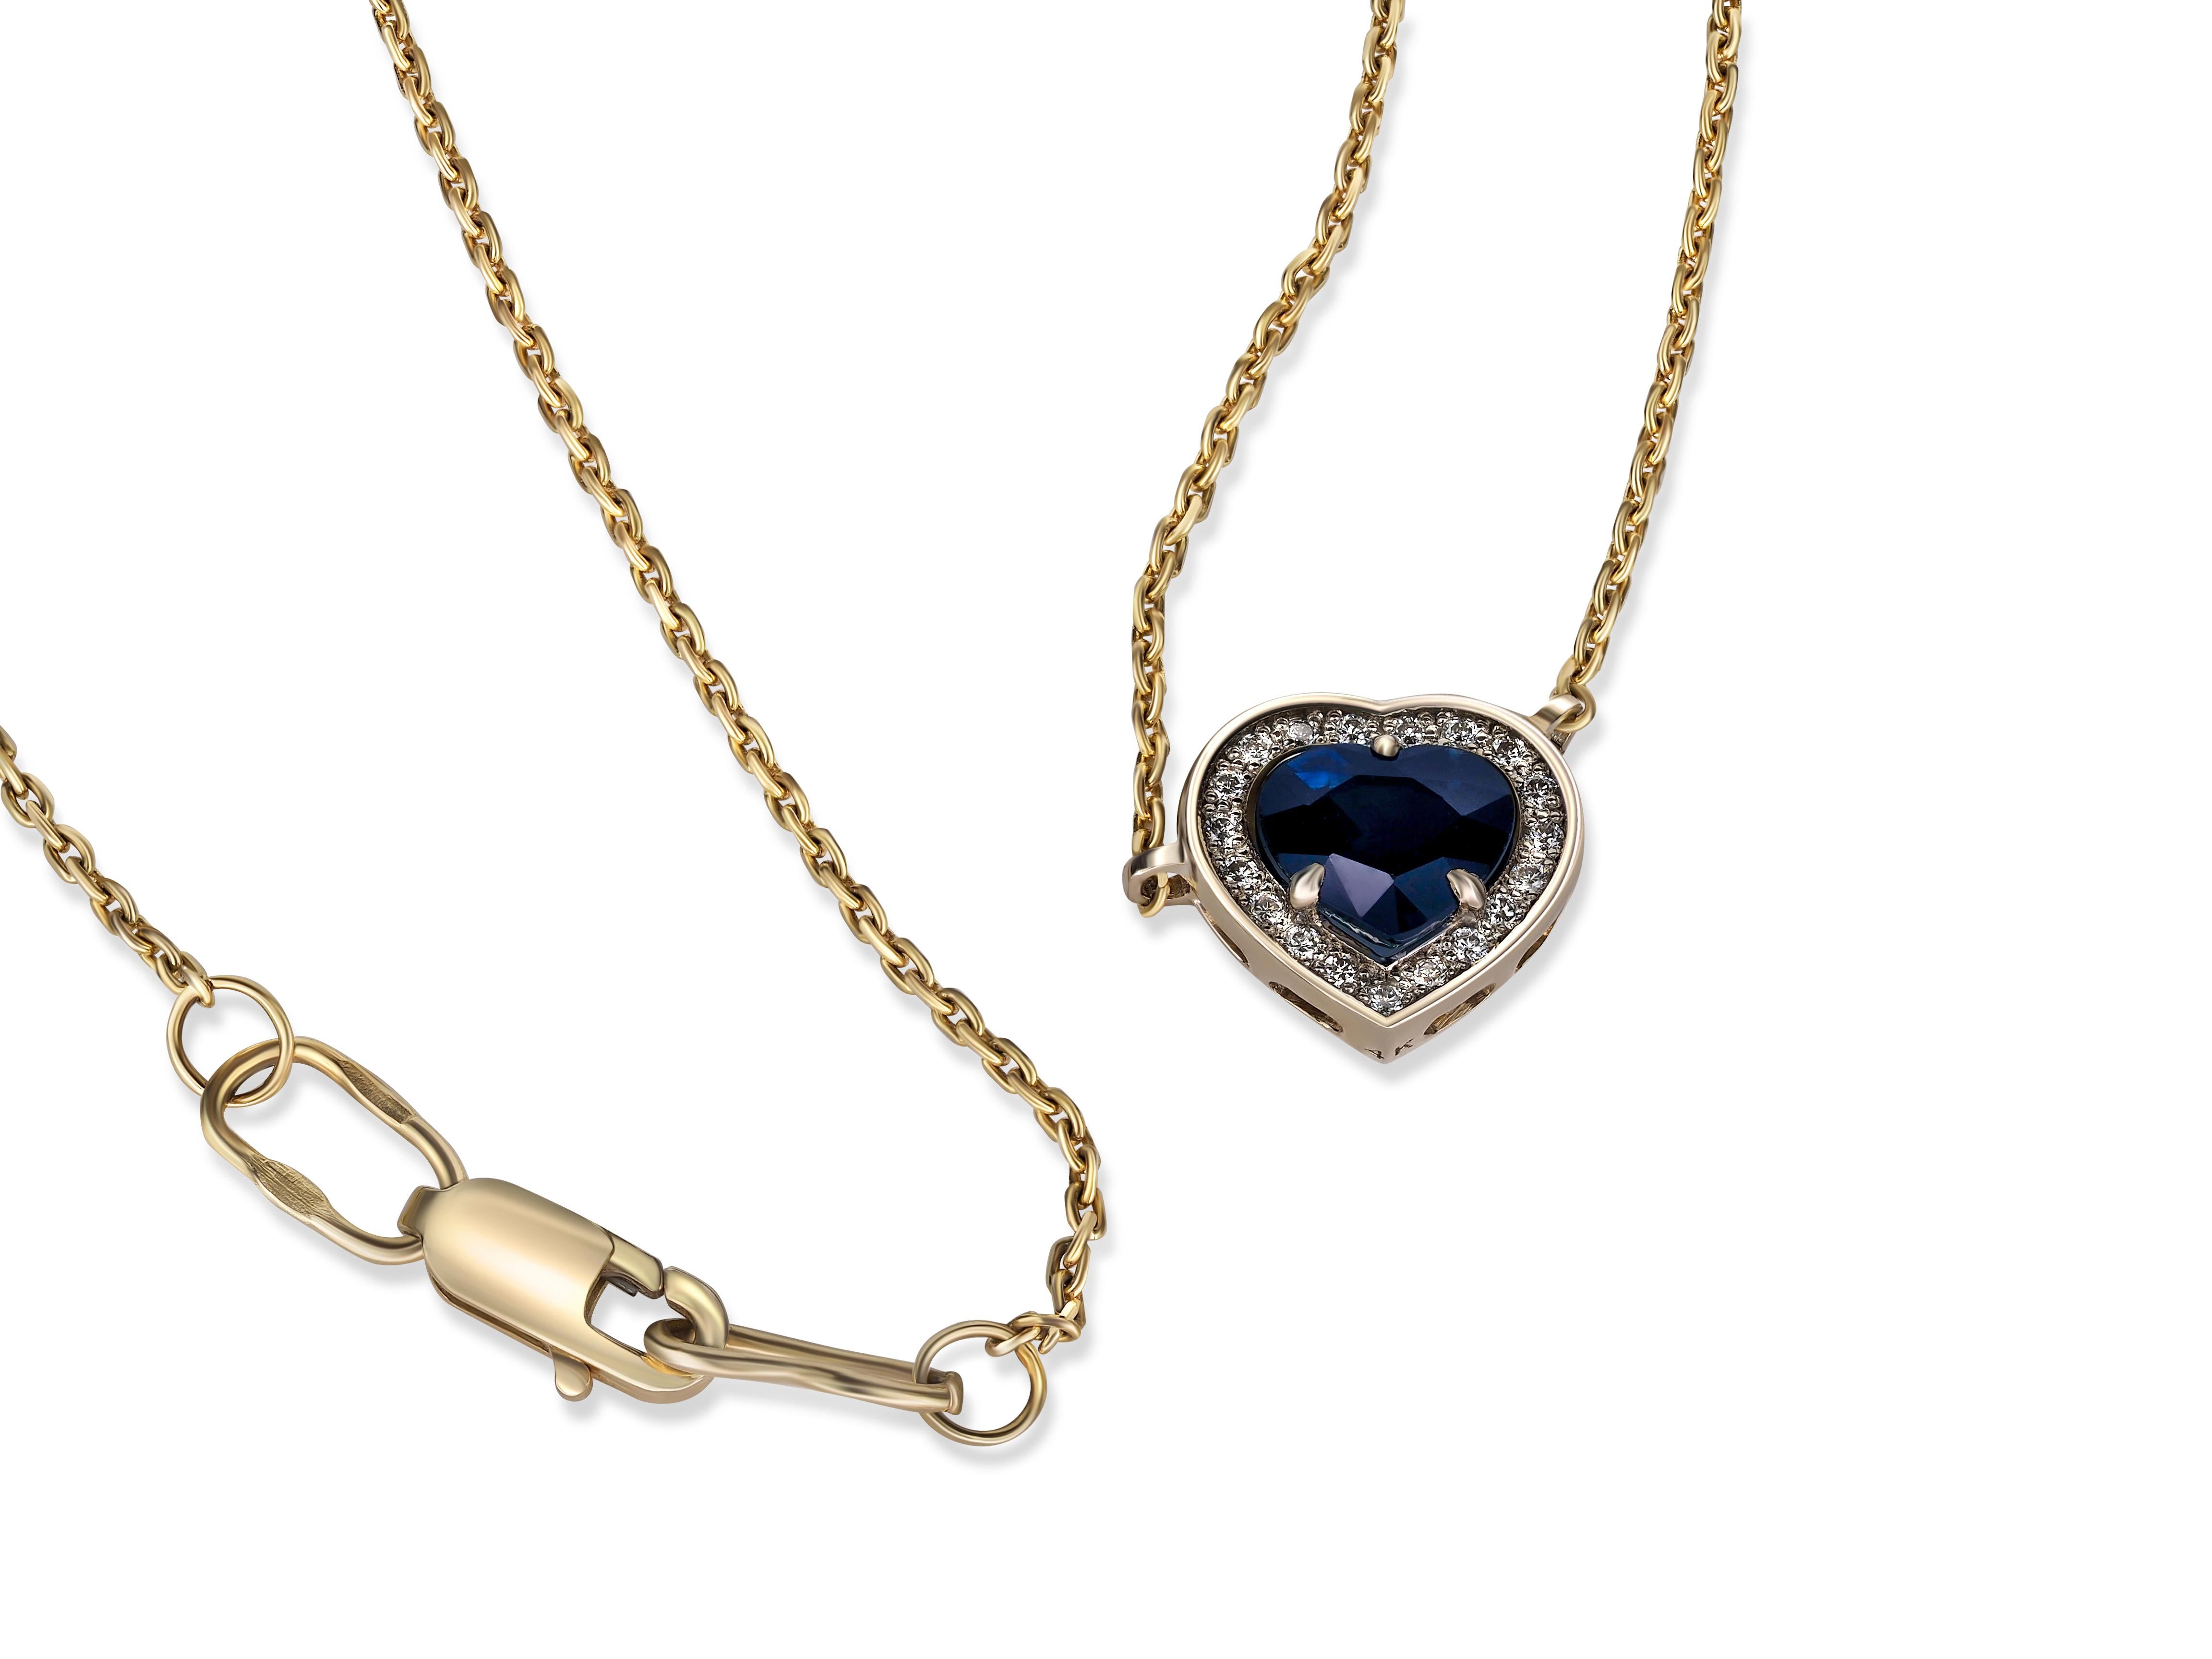 Sapphire necklace pendant in 14 karat white gold. Certified sapphire pendant. Heart sapphire pendant necklace. Blue sapphire pendant. Sapphire and diamonds necklace pendant. 

Weight: 3.45 g.
Pendant size: 10.5x12 mm
Necklace length - 50 sm
Pendant